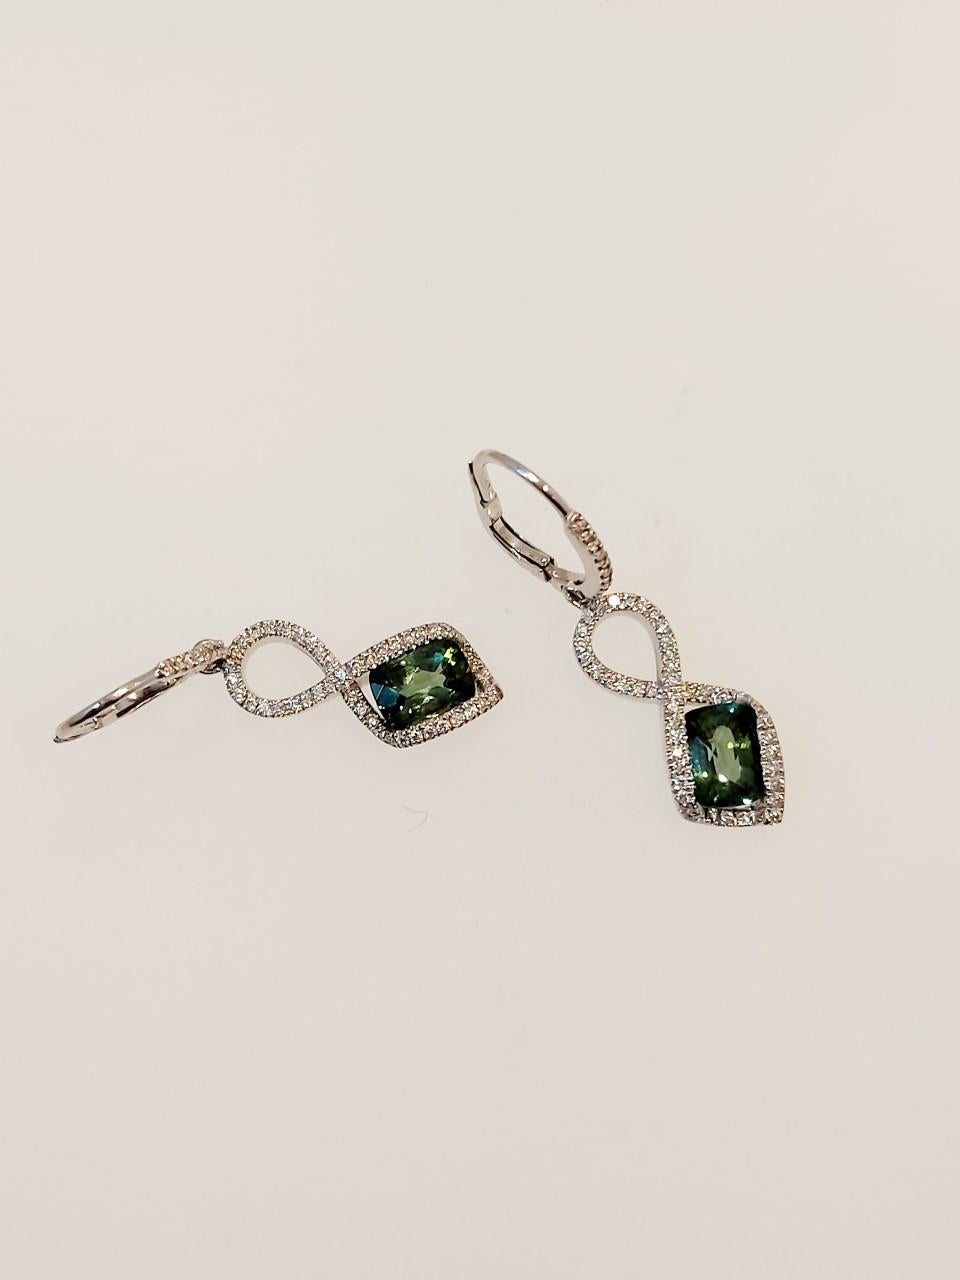 Emerald Cut Green Tourmaline & Diamond Earrings